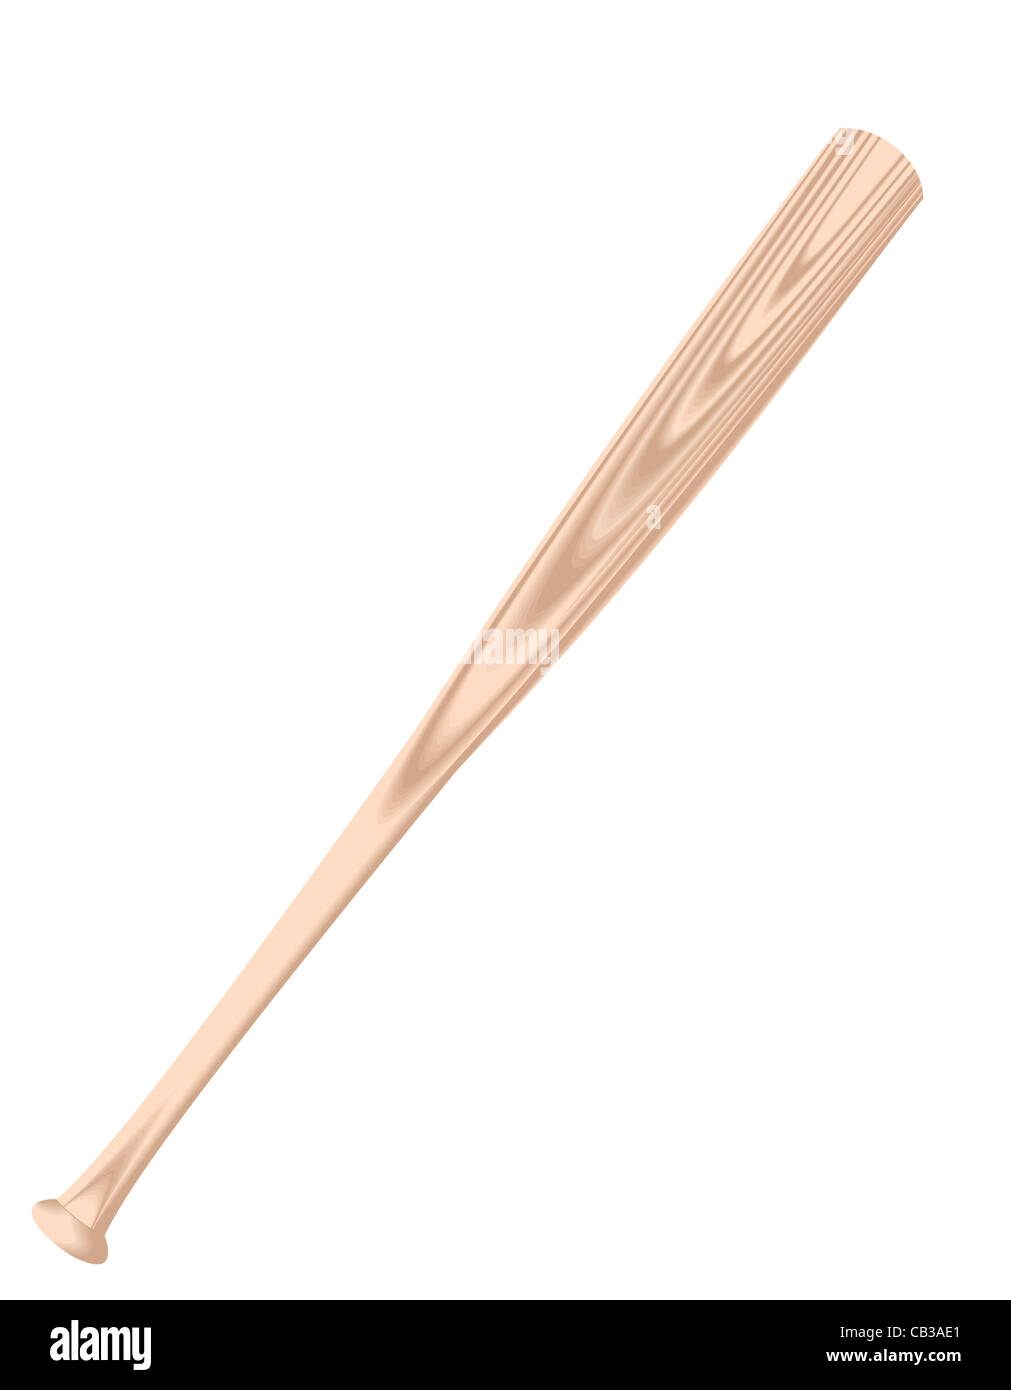 Realistic illustration of baseball bat - vector Stock Photo